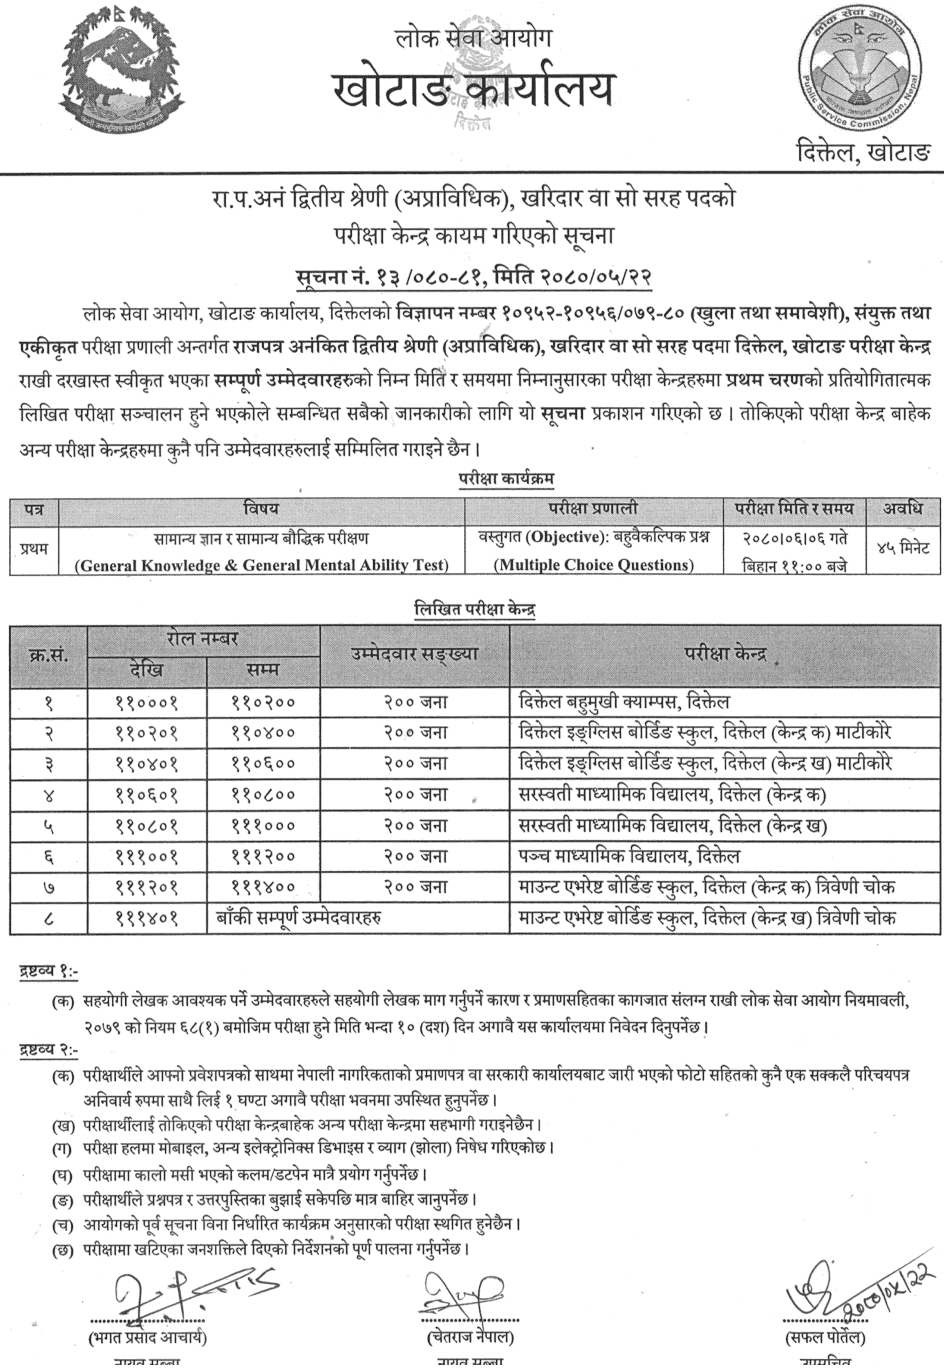 Lok Sewa Aayog Khotang 1st Phase Written Exam Center of Kharidar 2080